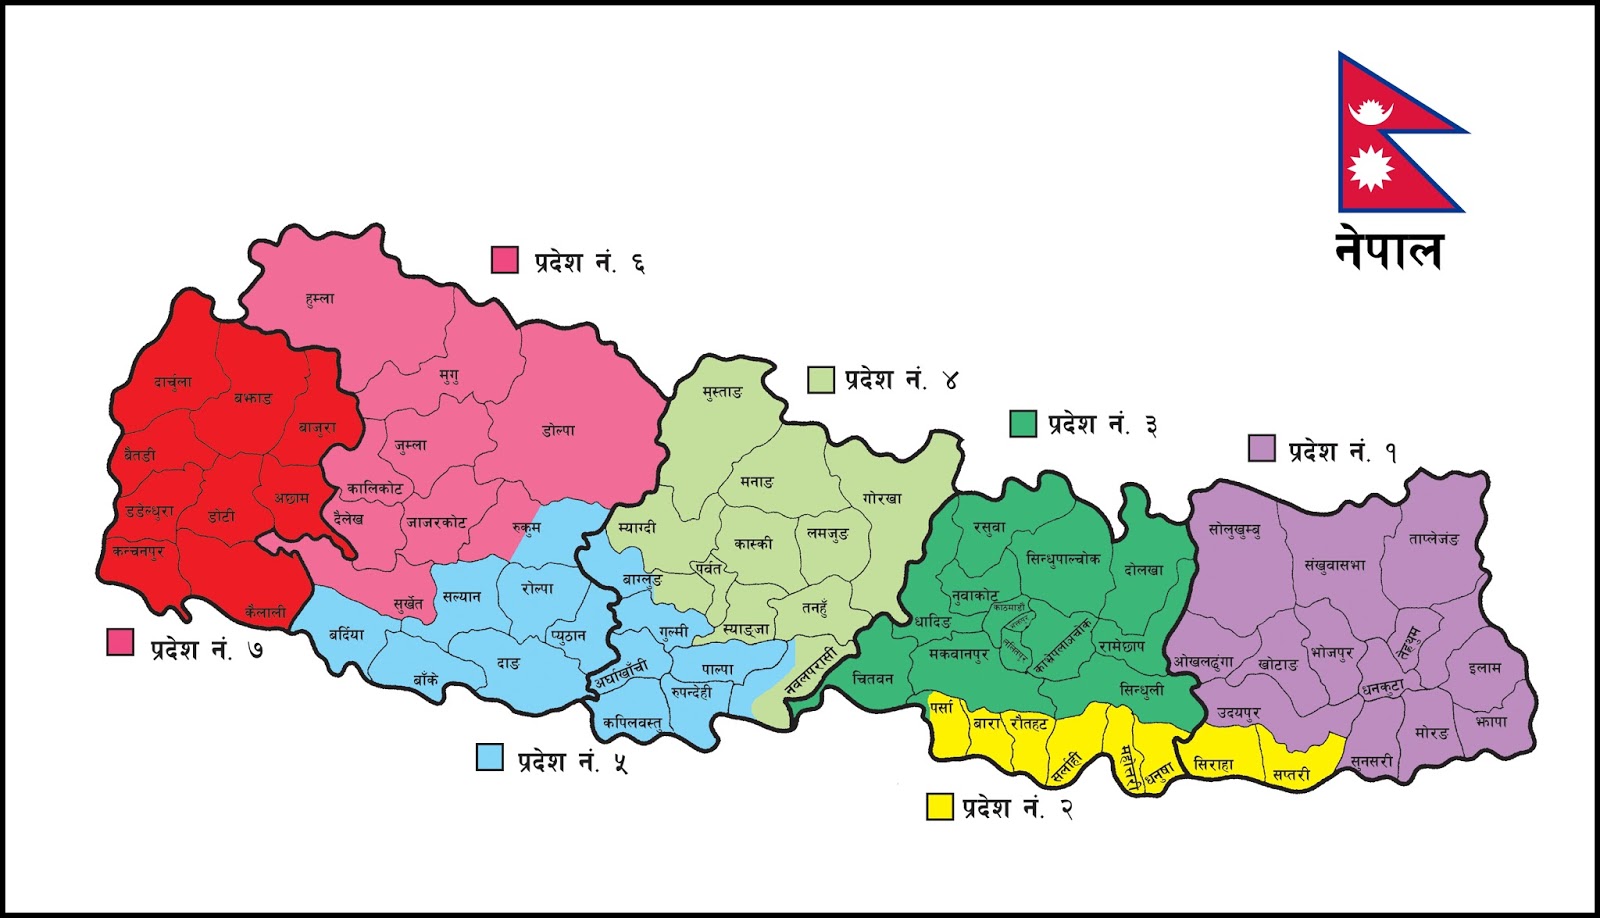 Namaste Nepal: New Map of Nepal